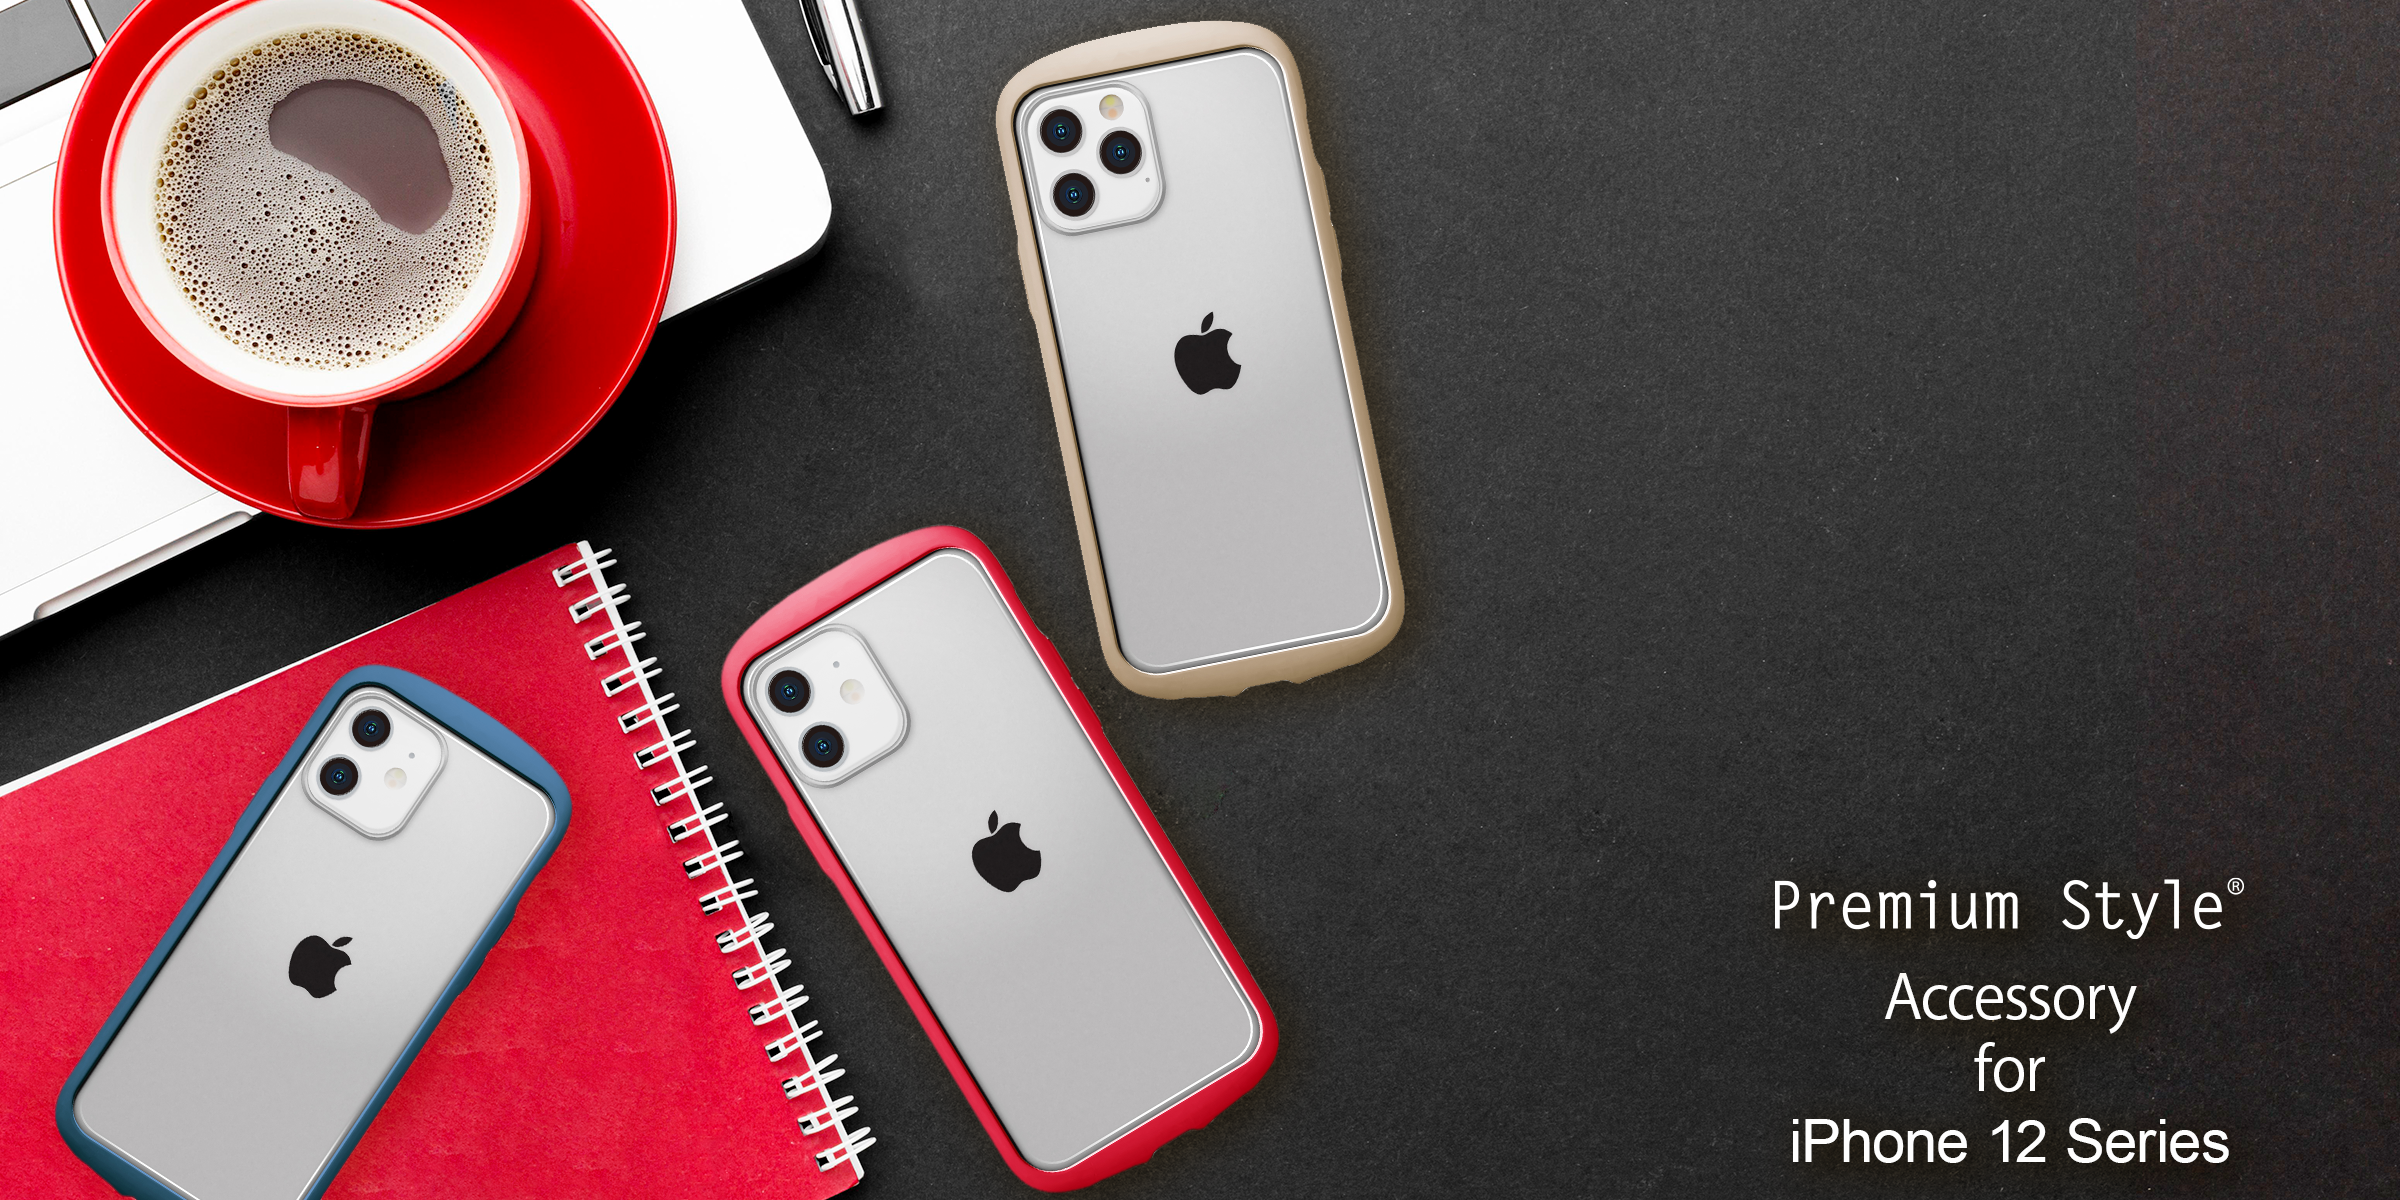 [Premium Style] iPhone12 mini、iPhone12、iPhone12 Pro、iPhone12Pro Maxの4端末に対応したケース、フィルム等を順次発売